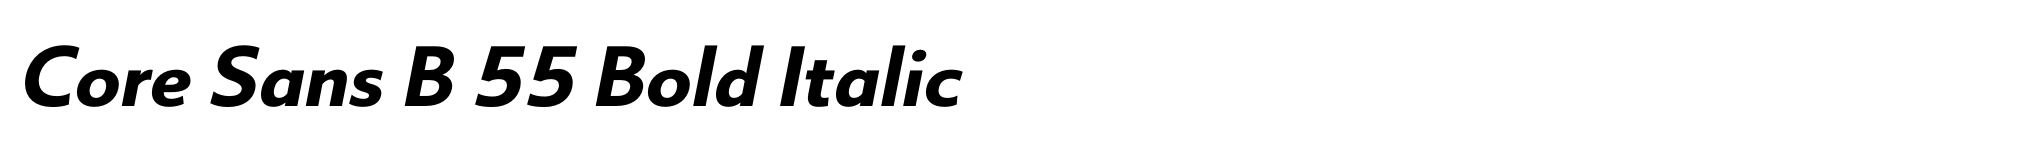 Core Sans B 55 Bold Italic image